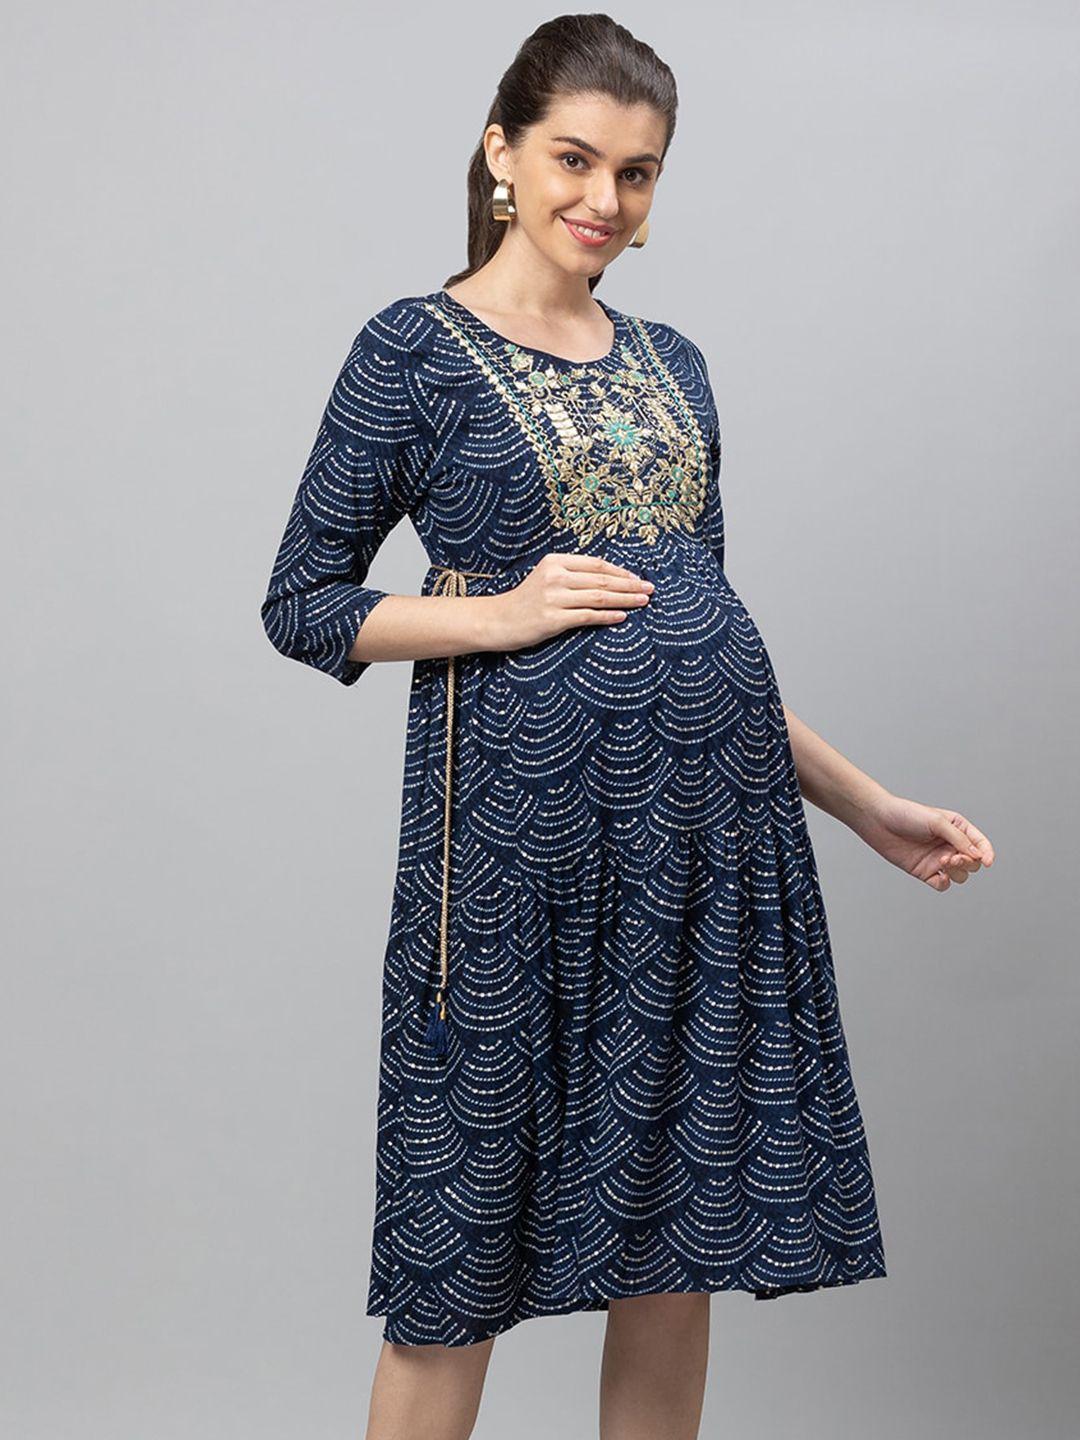 av2 blue bohemian fit and flare maternity dress